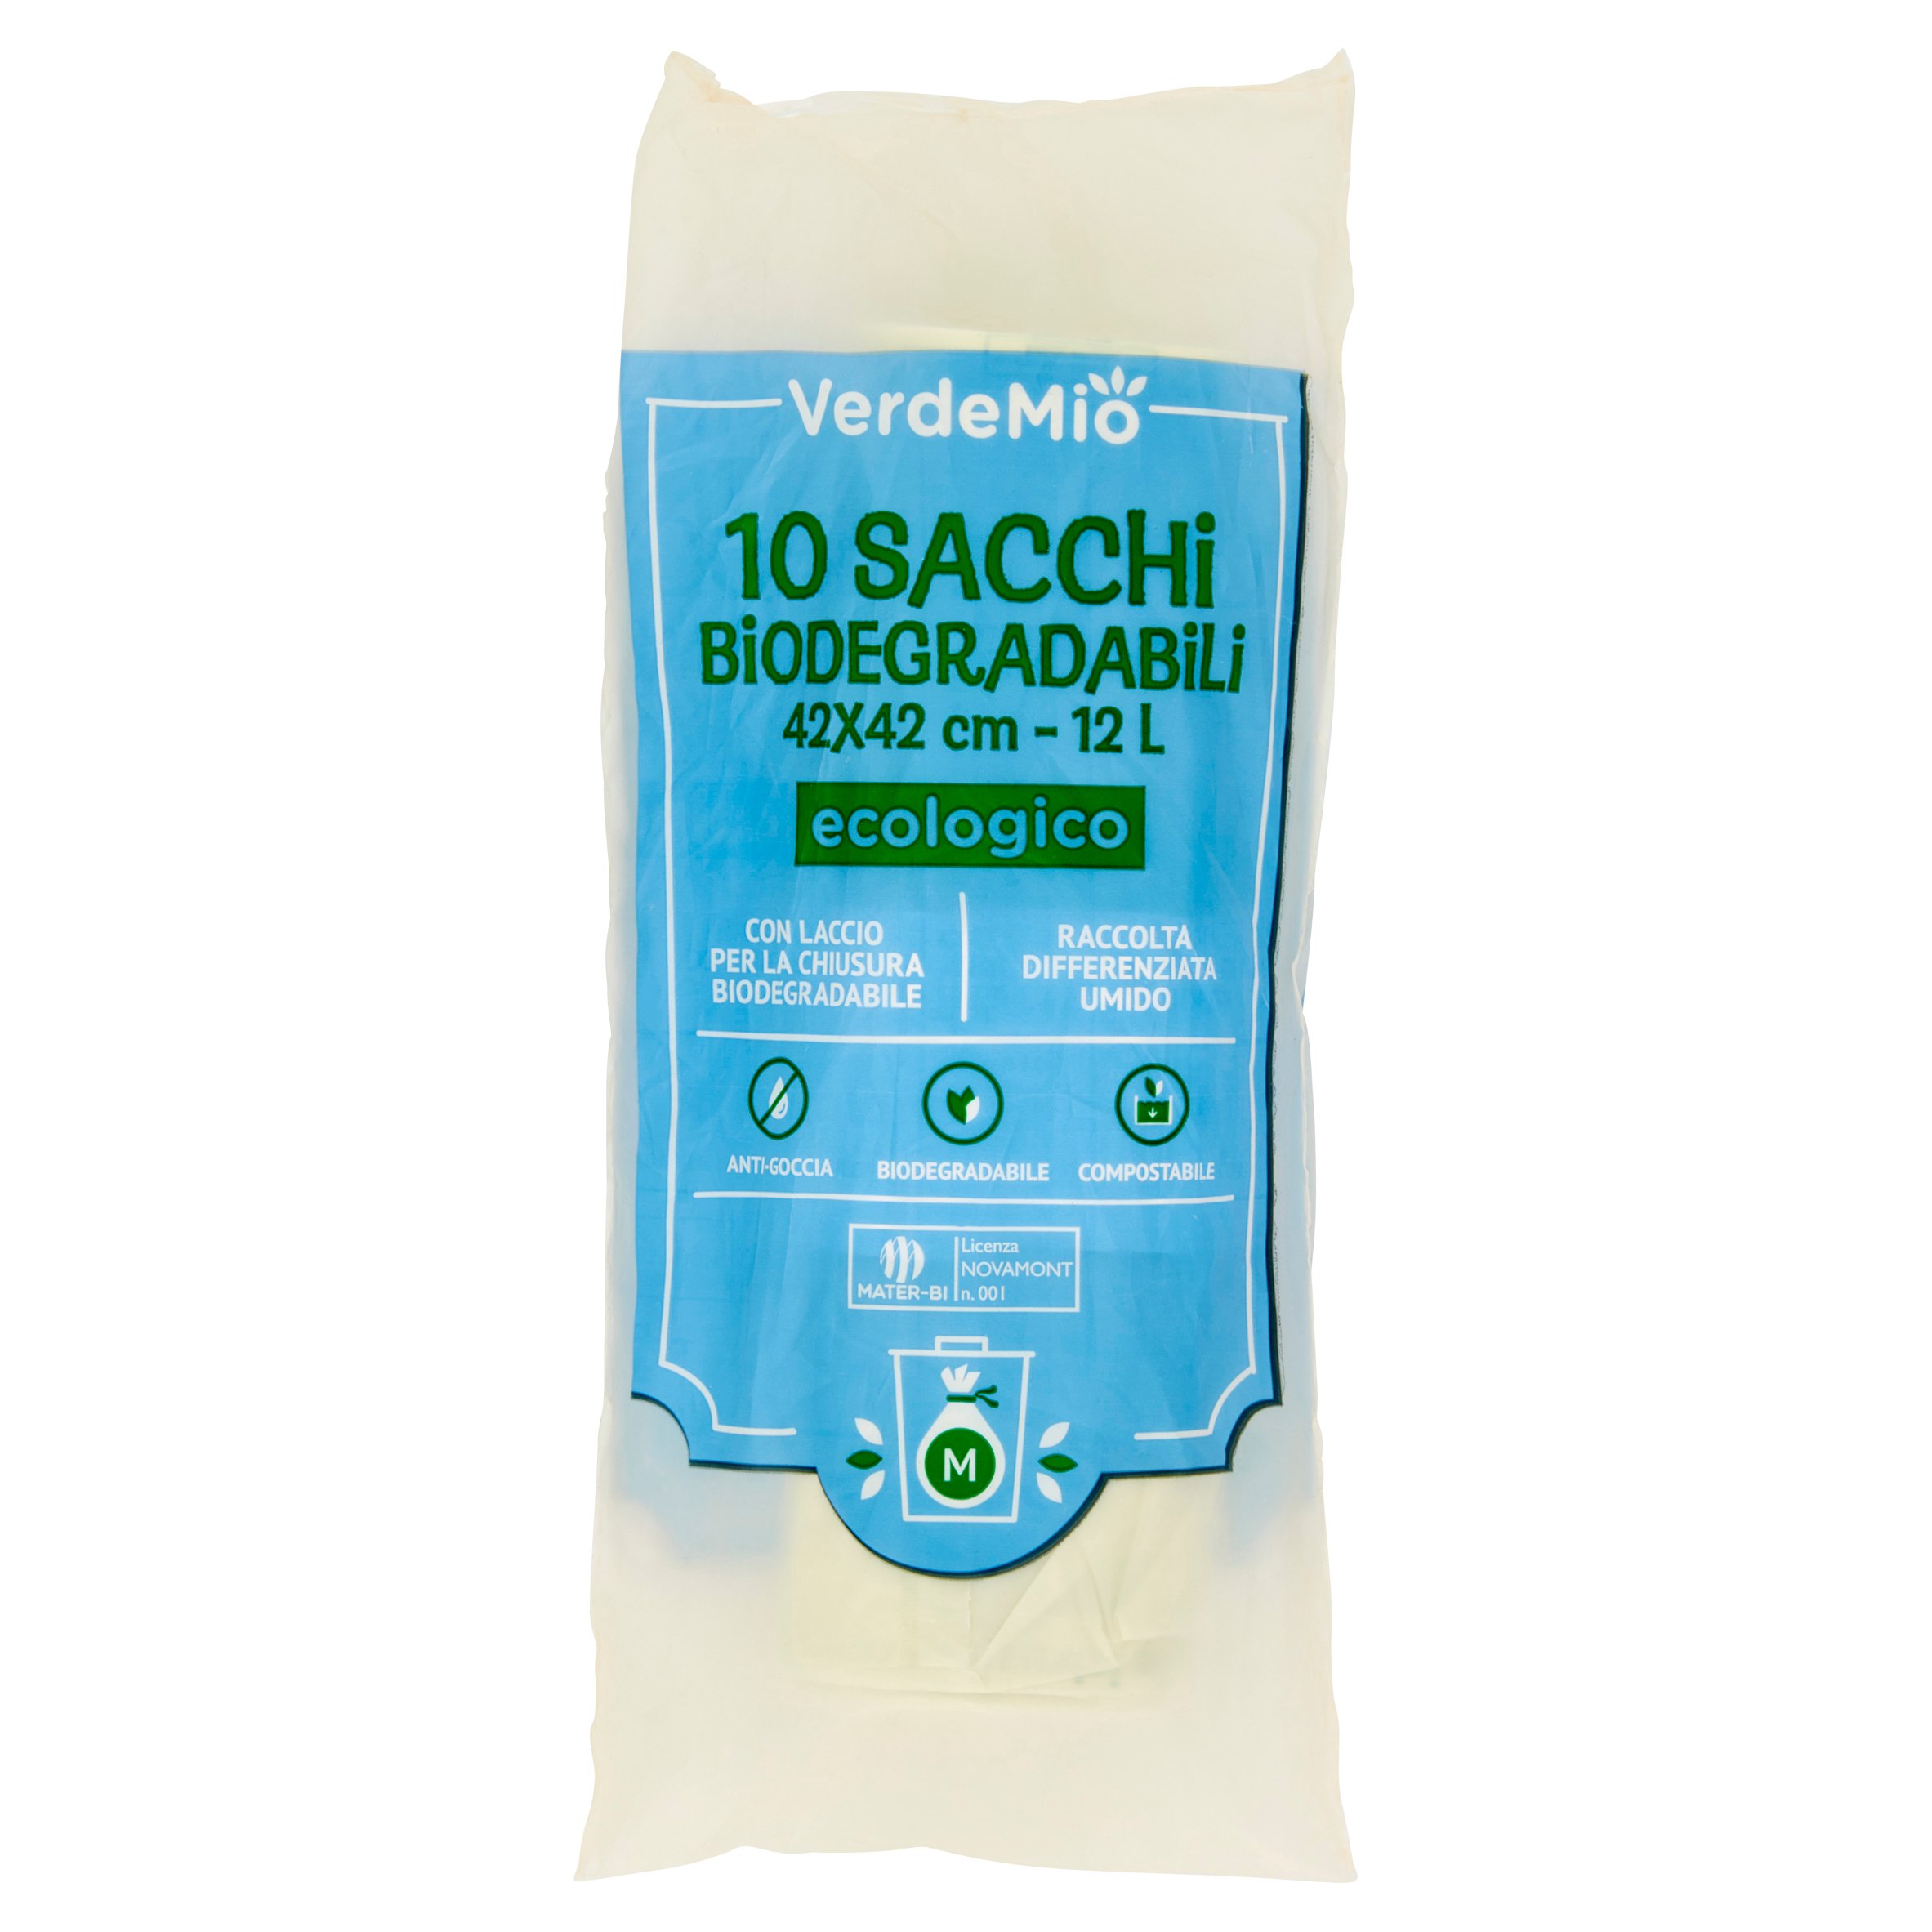 VerdeMio Sacchi Biodegradabili 42x42 cm 12 L ecologico 10 pz - SuperSISA